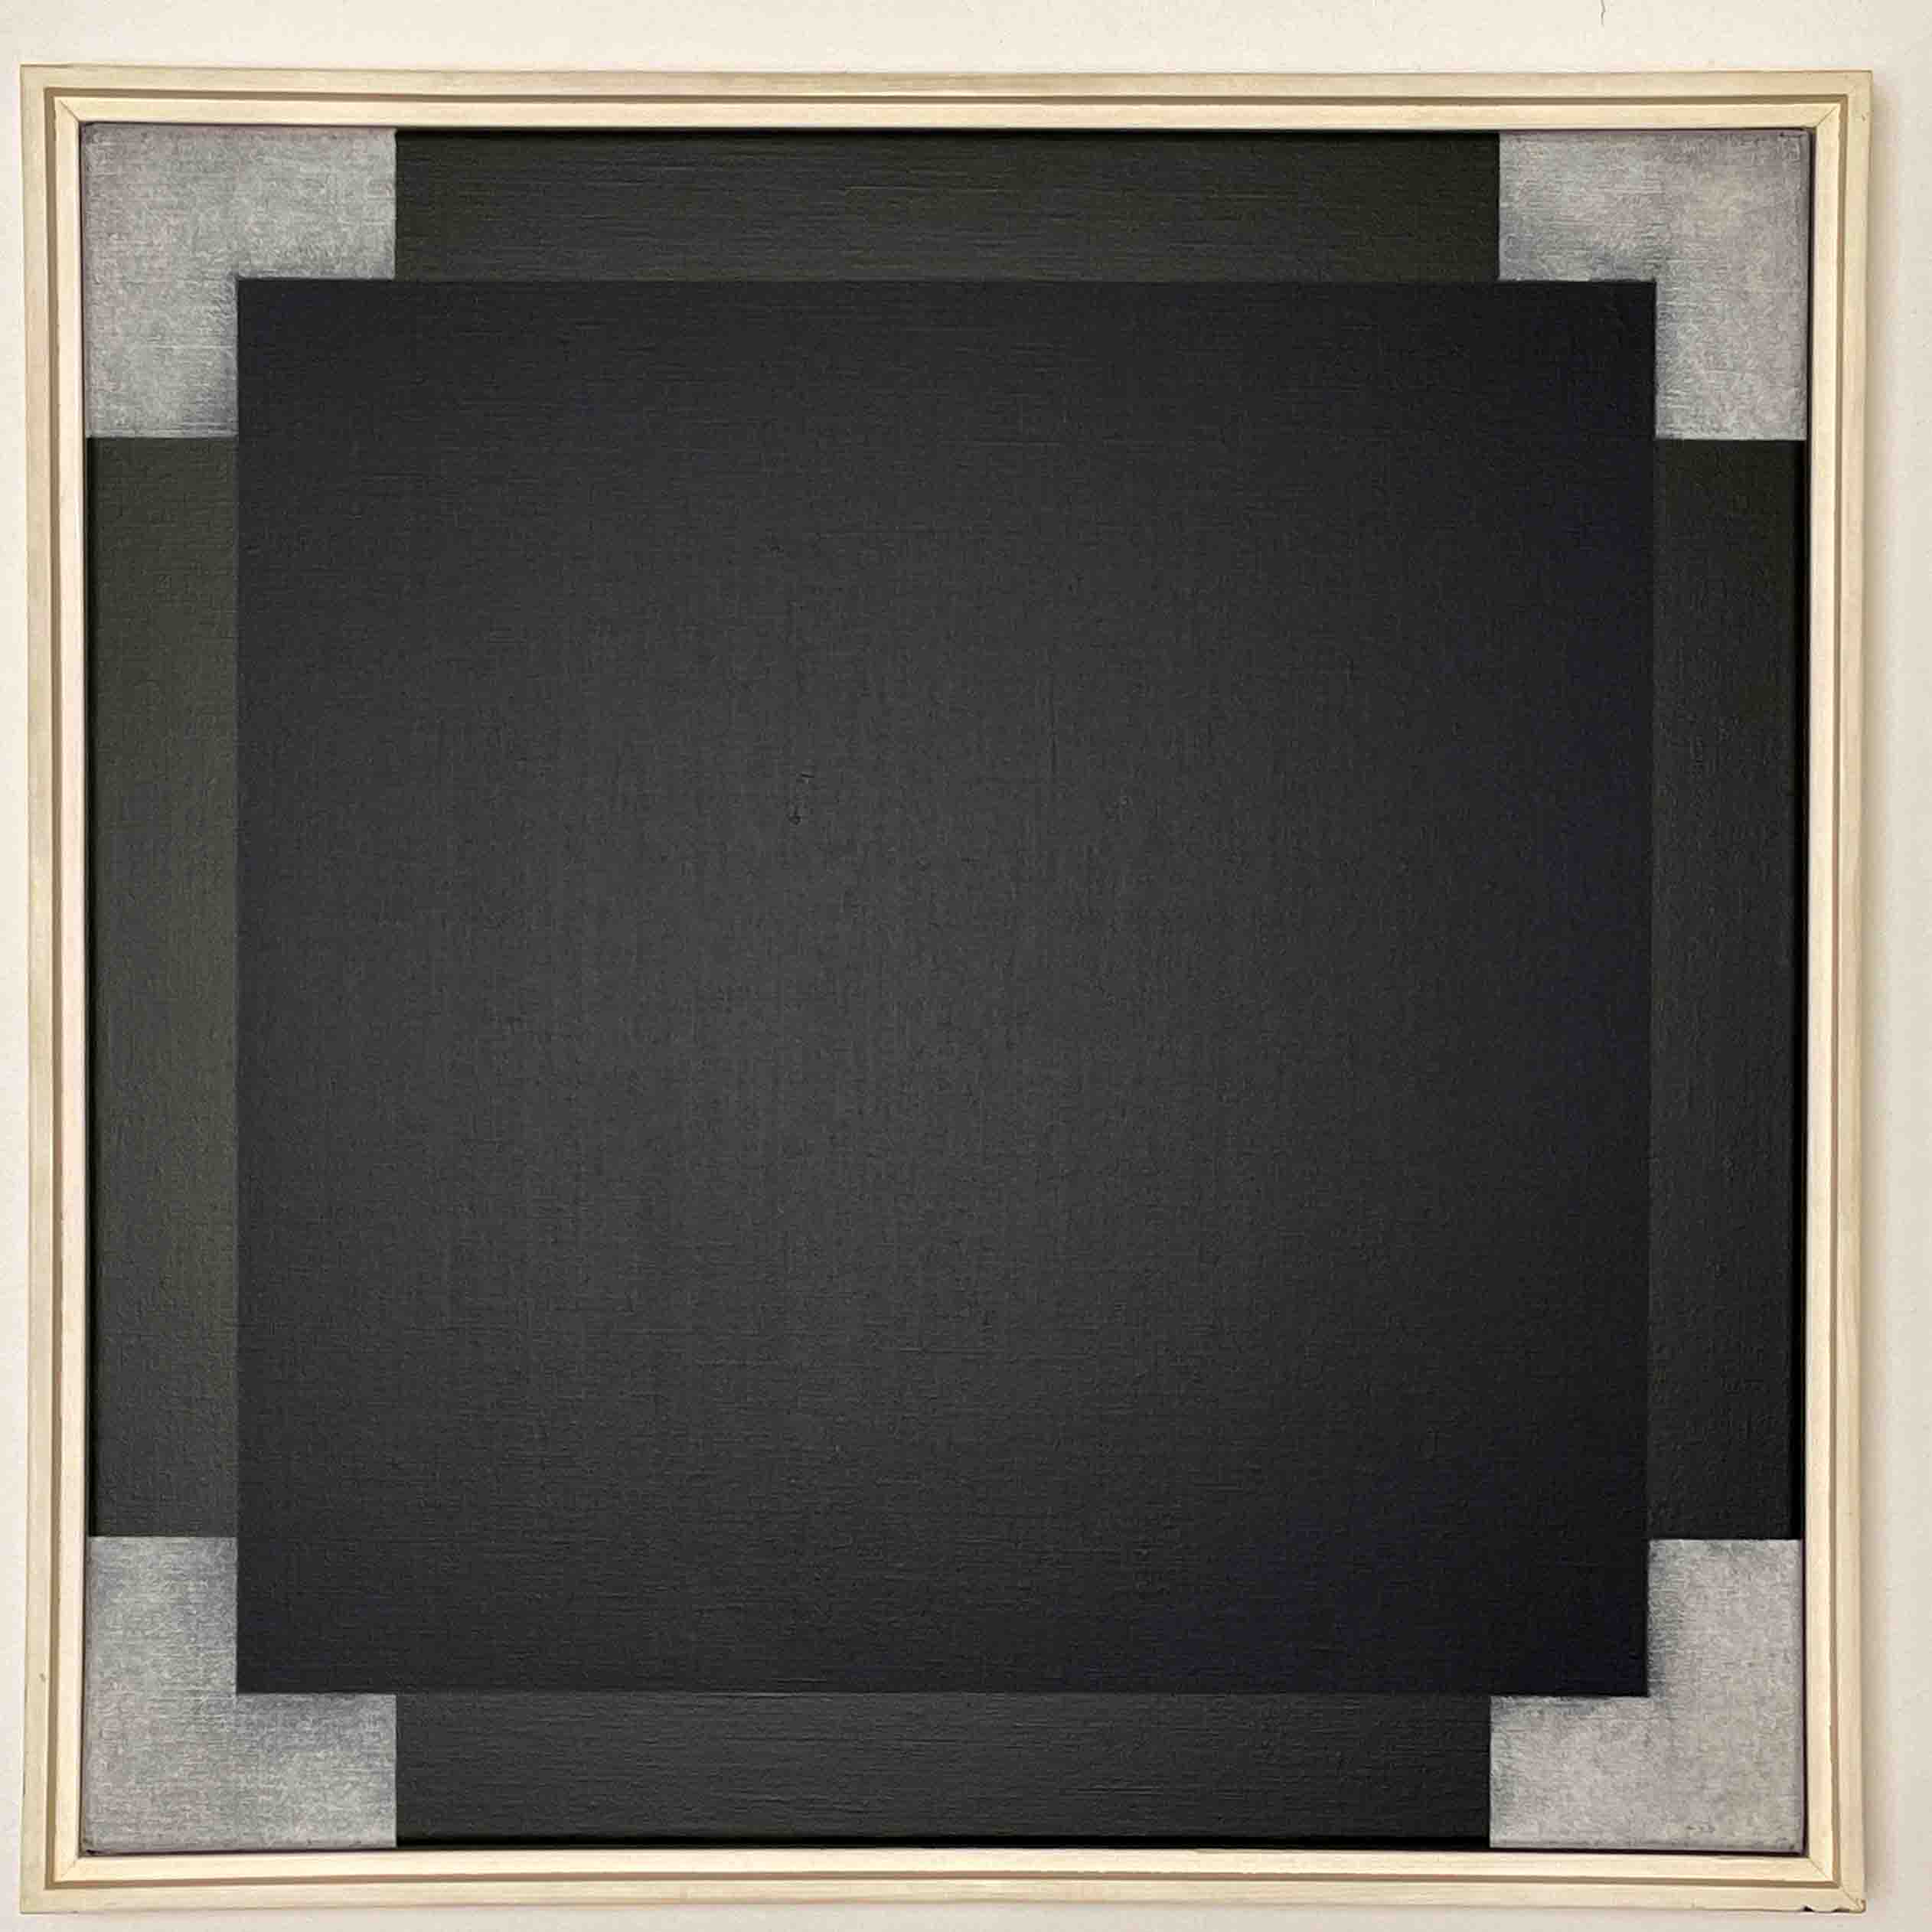 Geert van Fastenhout – “Painting no. 5”, 1988 – oil on linnen, framed